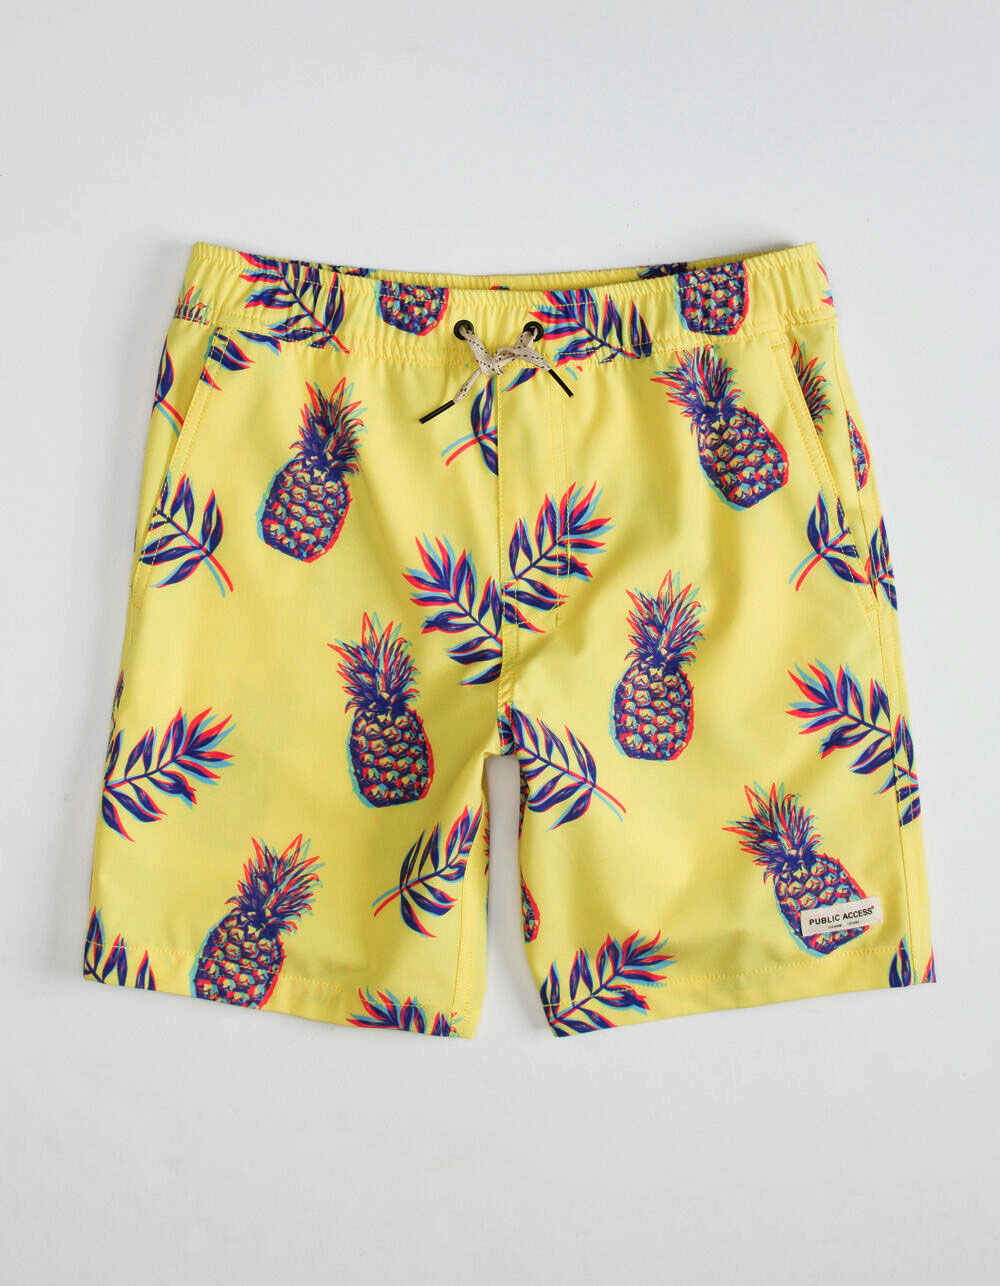 PUBLIC ACCESS Neon Pineapple Boys Elastic Waist Shorts - YELLOW | Tillys